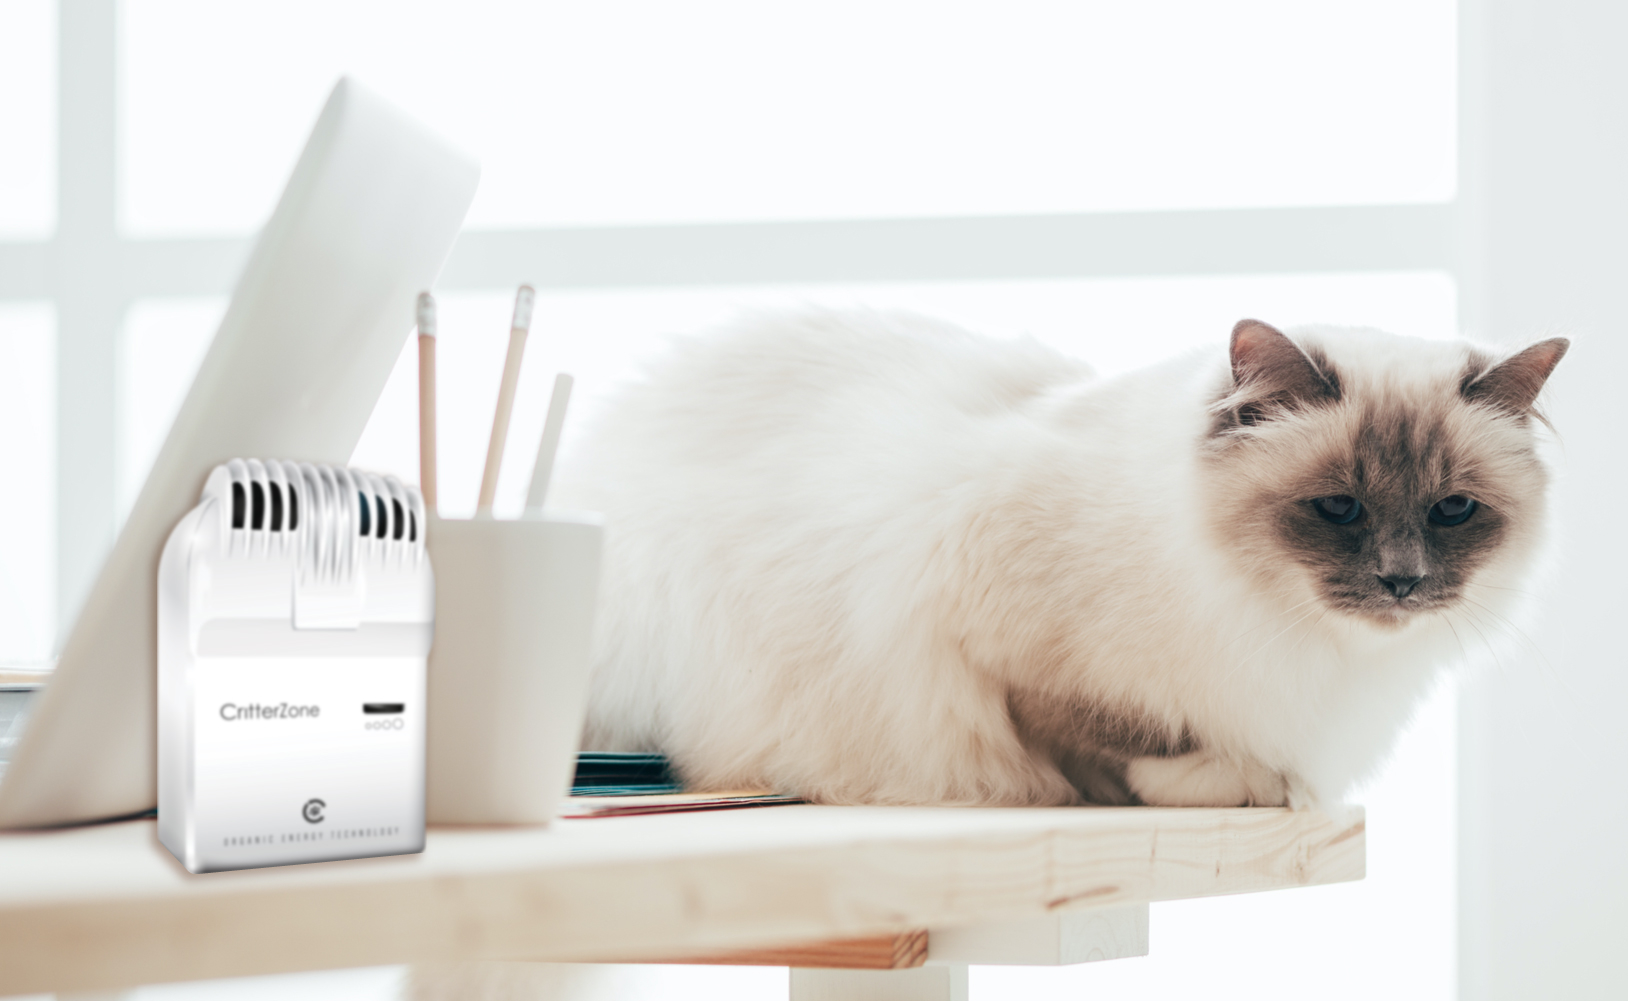 A siamese cat sitting on desk near a CritterZone unit.